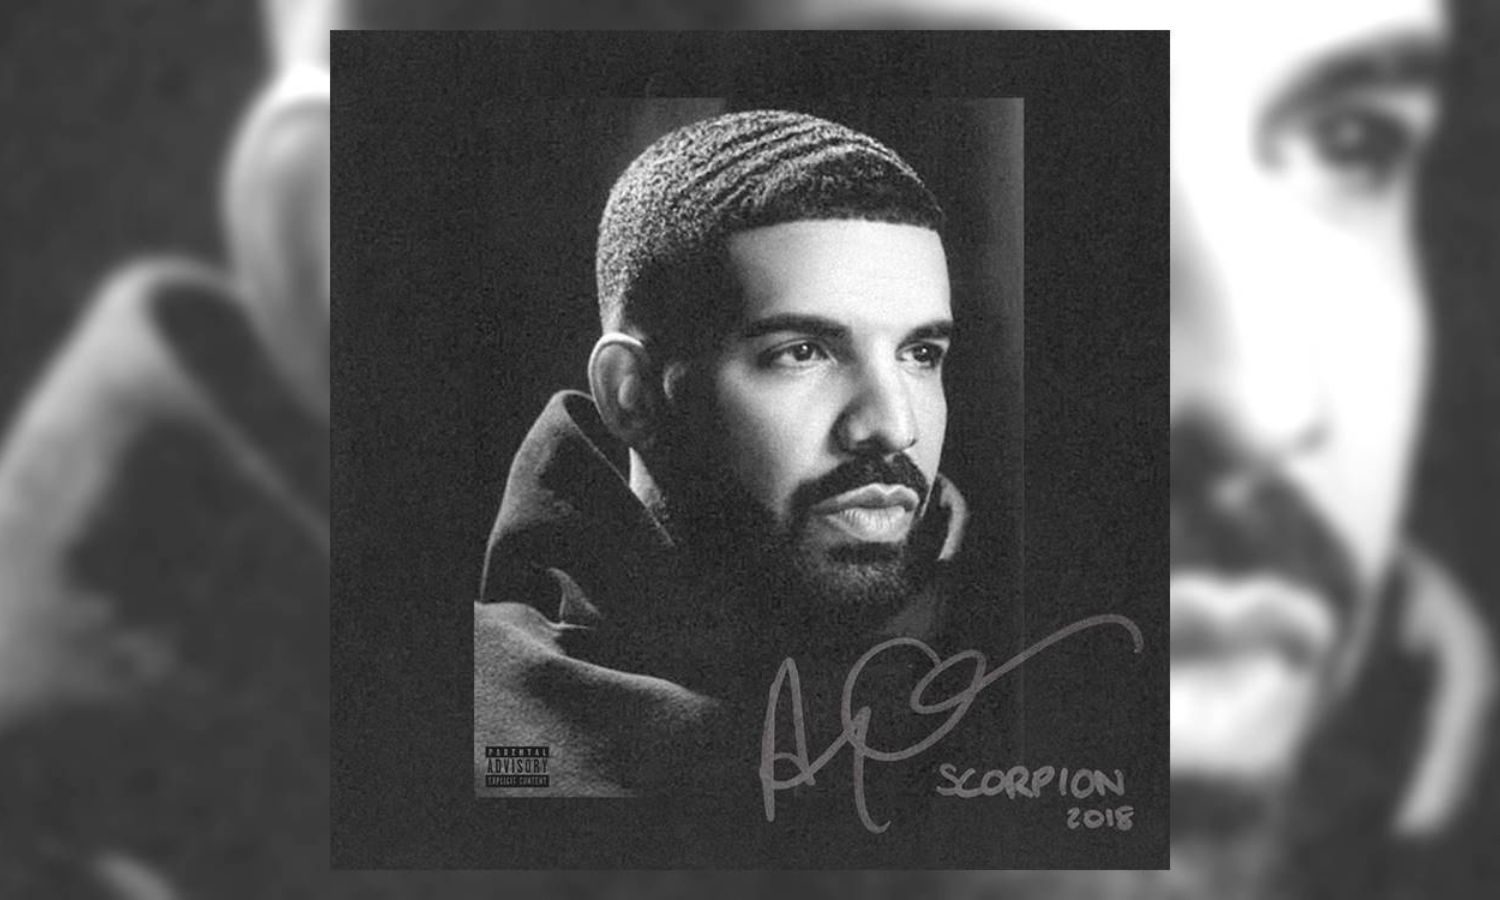 OTD in 2018: Drake's album "Scorpion" was released.